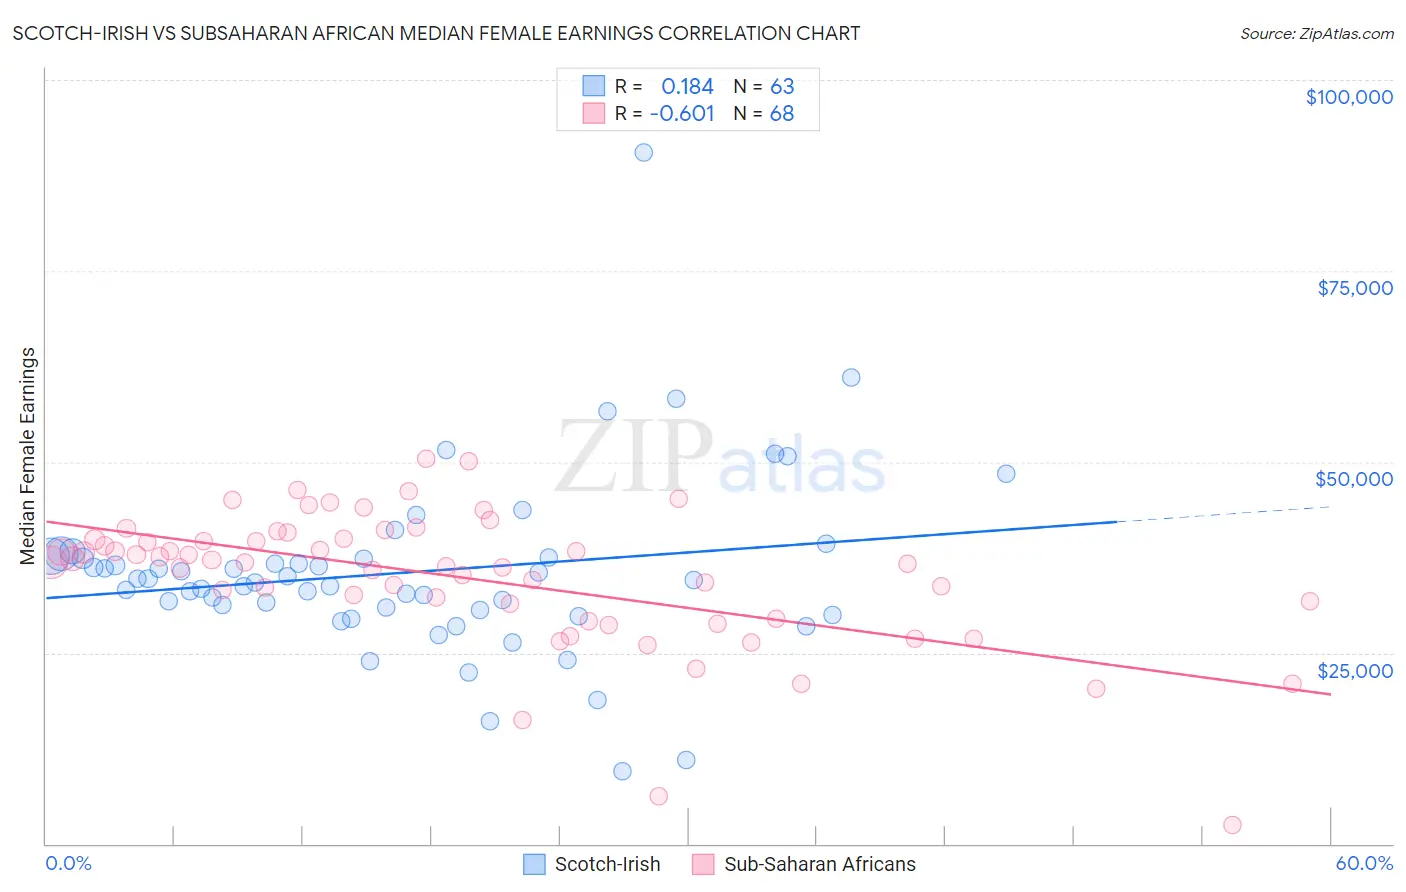 Scotch-Irish vs Subsaharan African Median Female Earnings